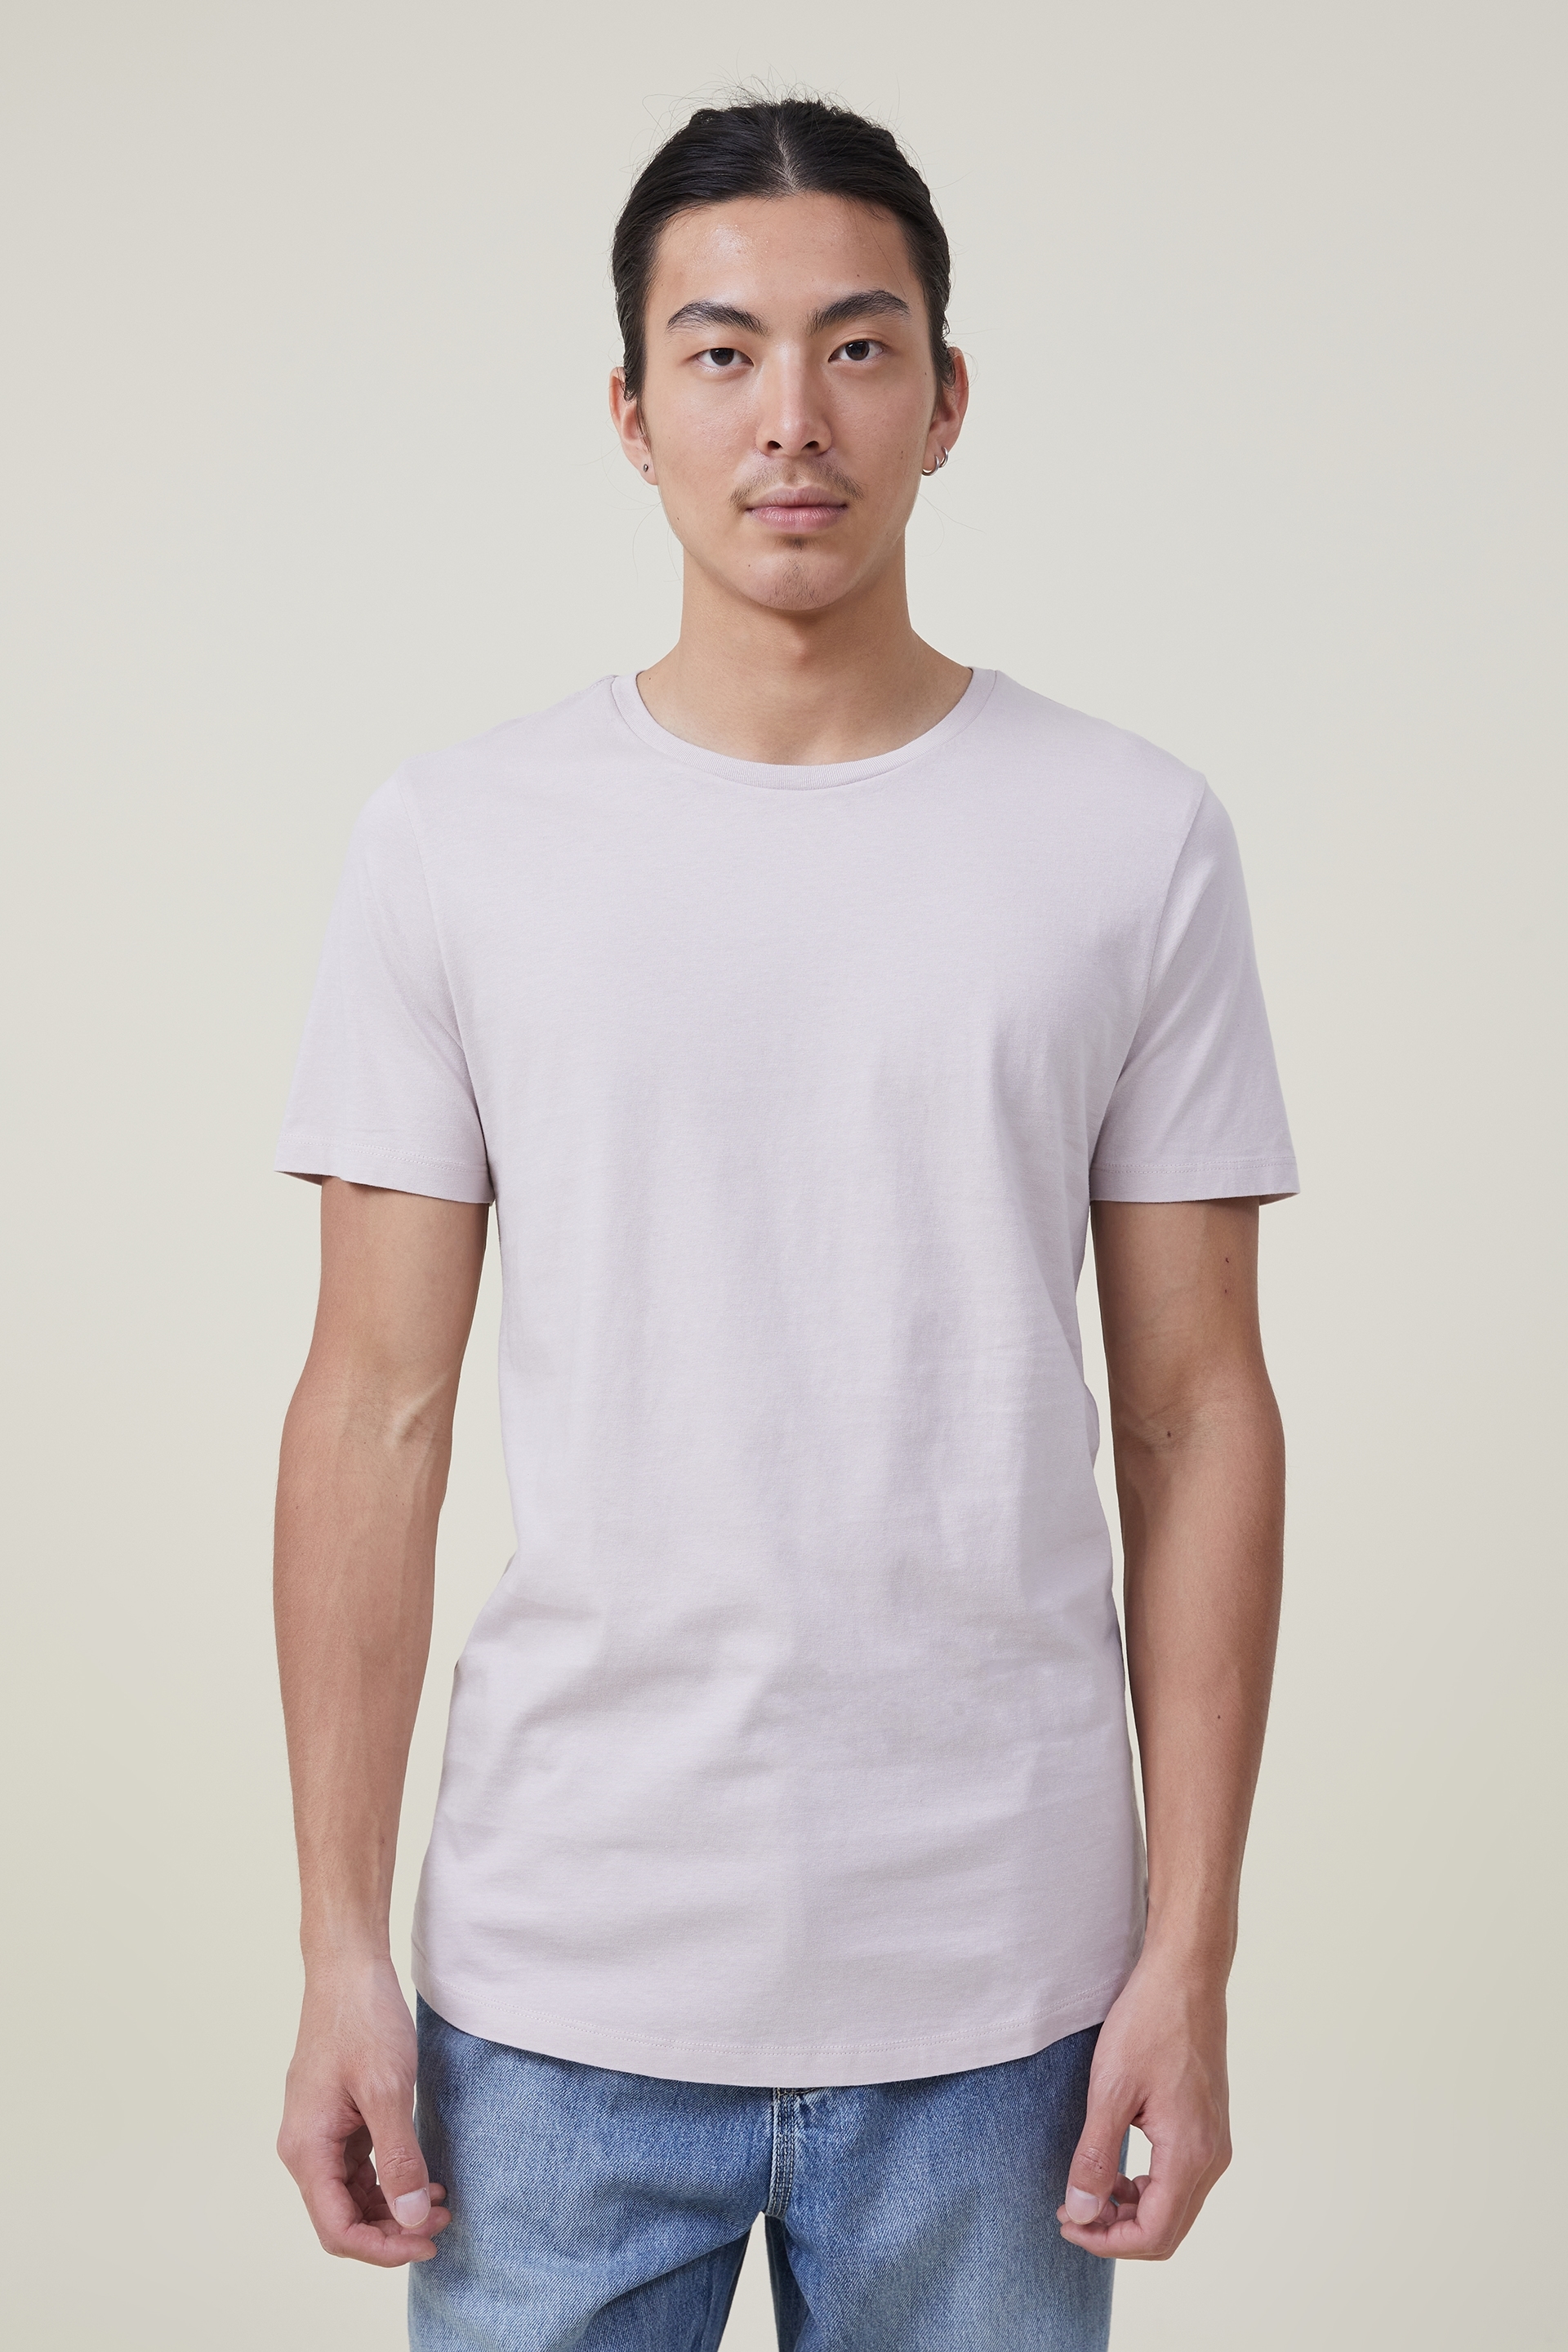 Cotton On Men - Organic Longline T-Shirt - Iced lilac